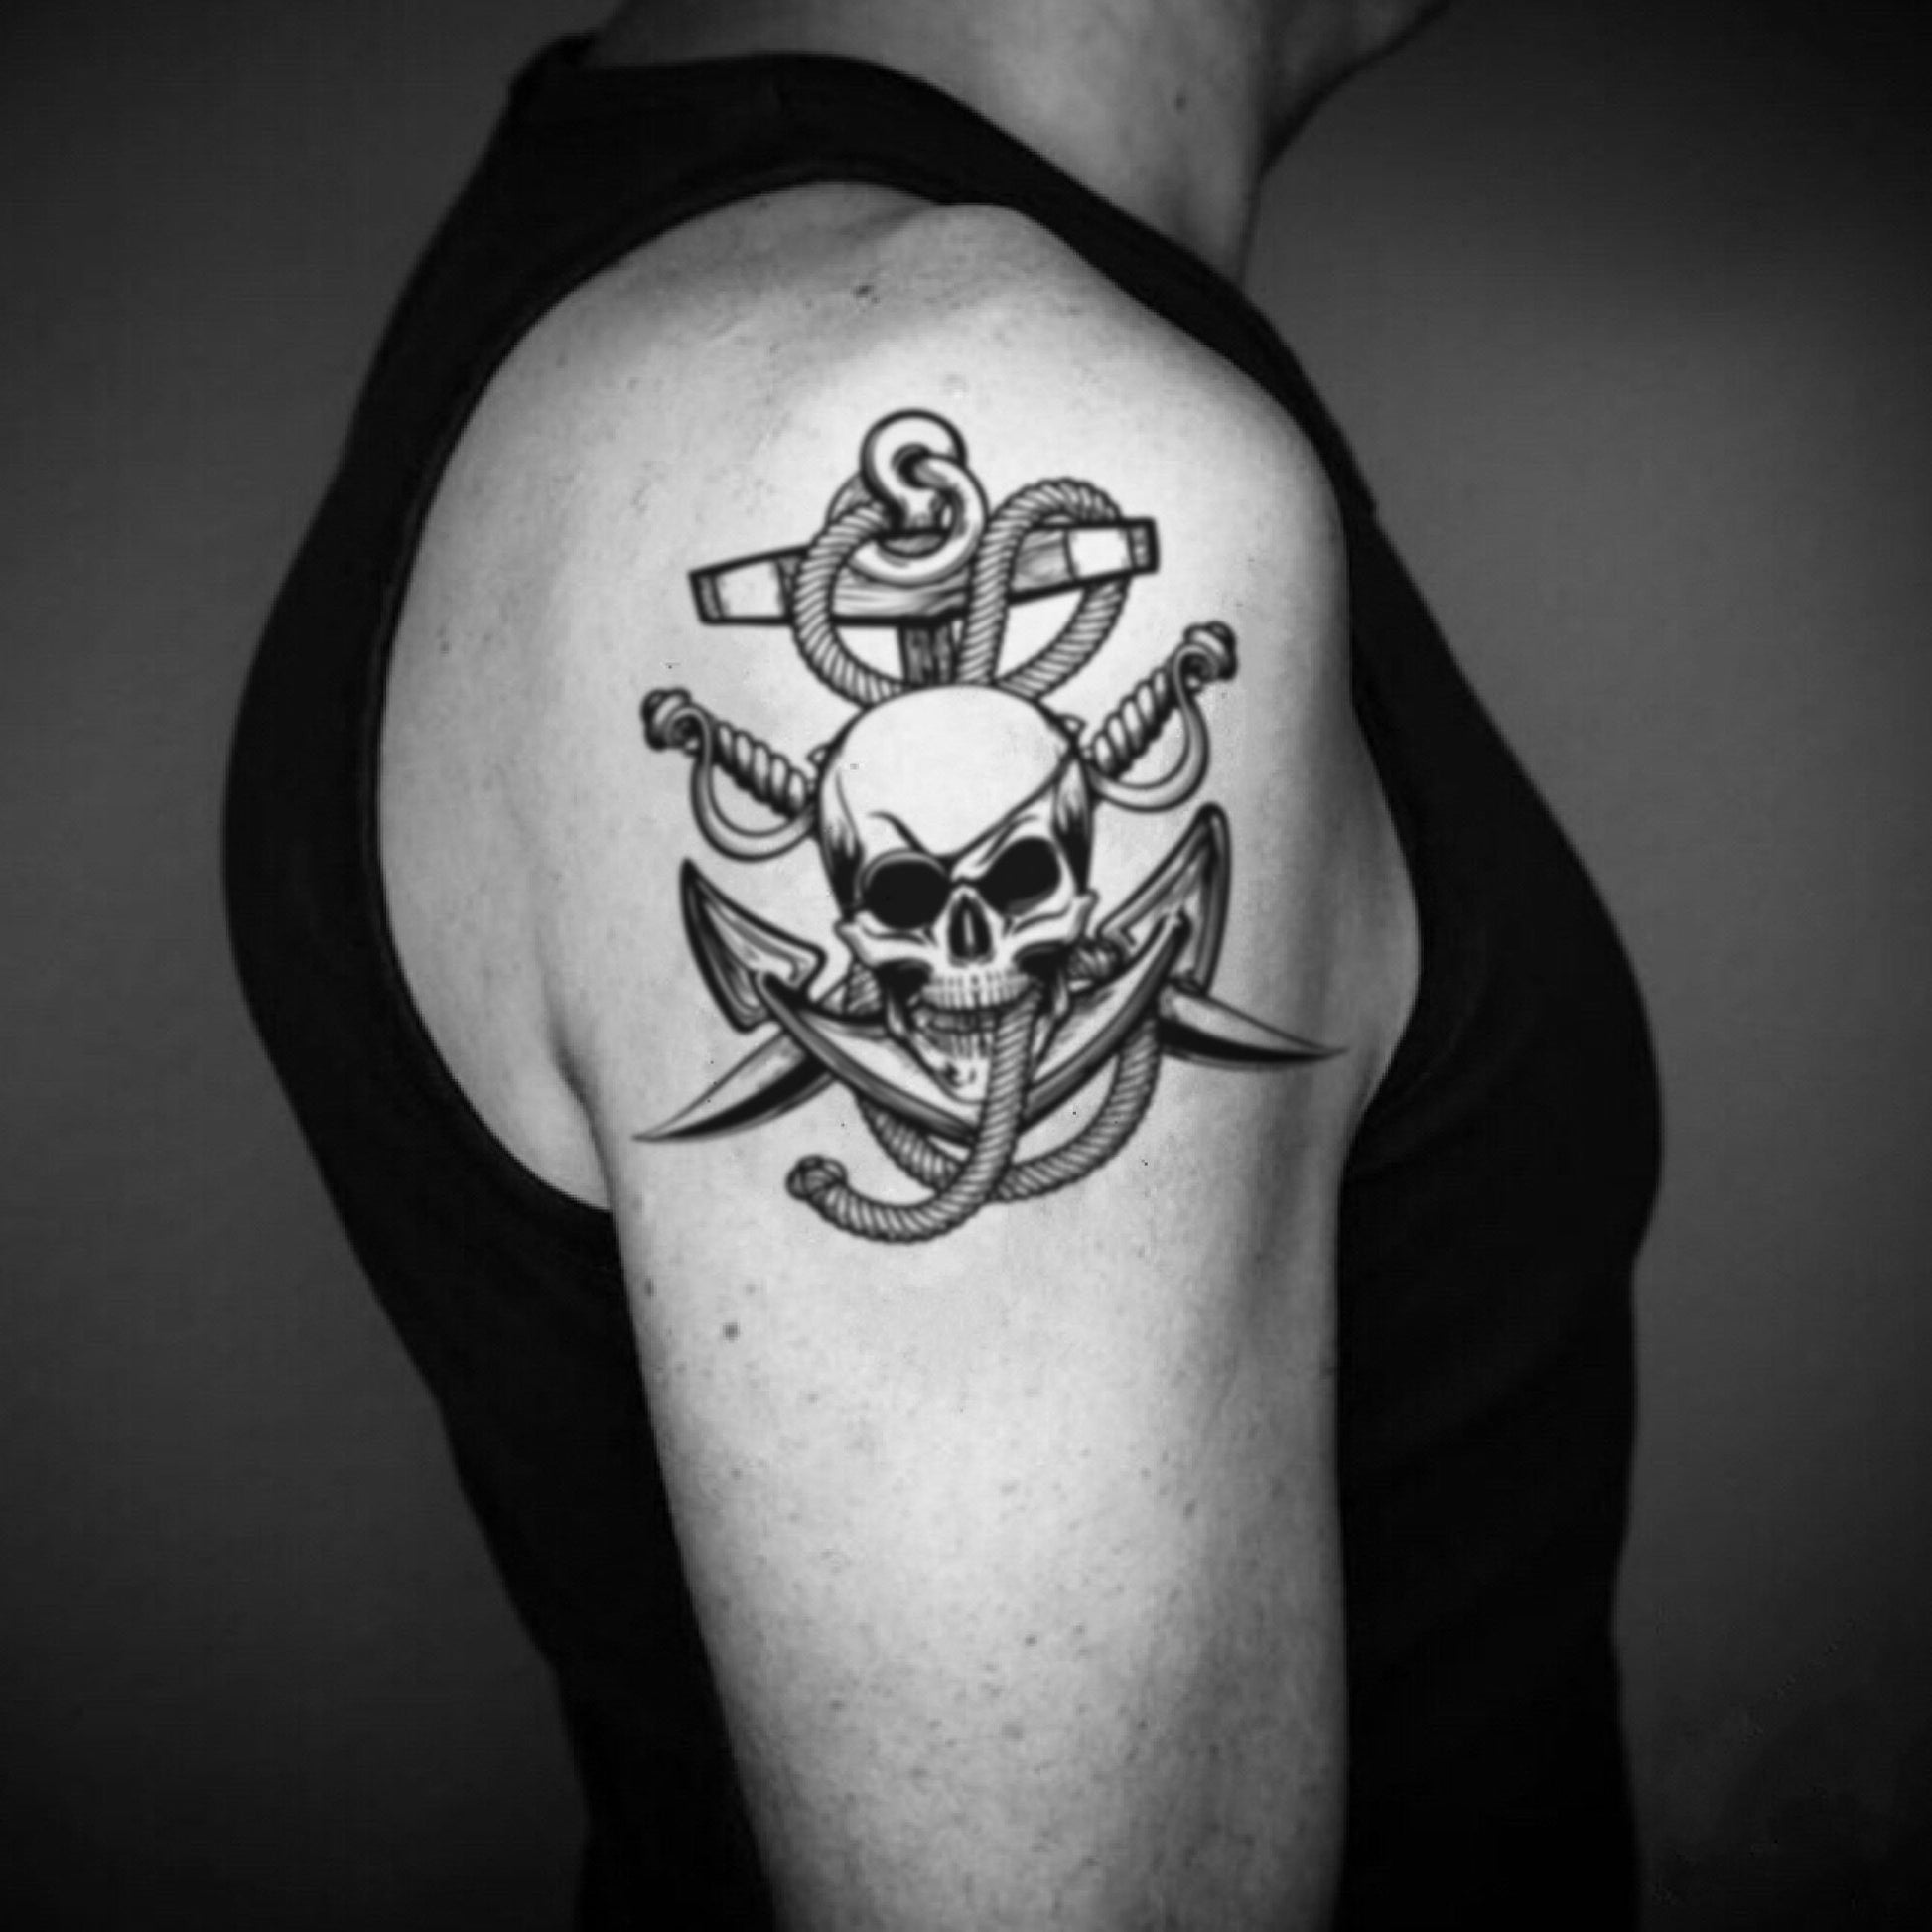 fake big gunners mate navy illustrative temporary tattoo sticker design idea on upper arm